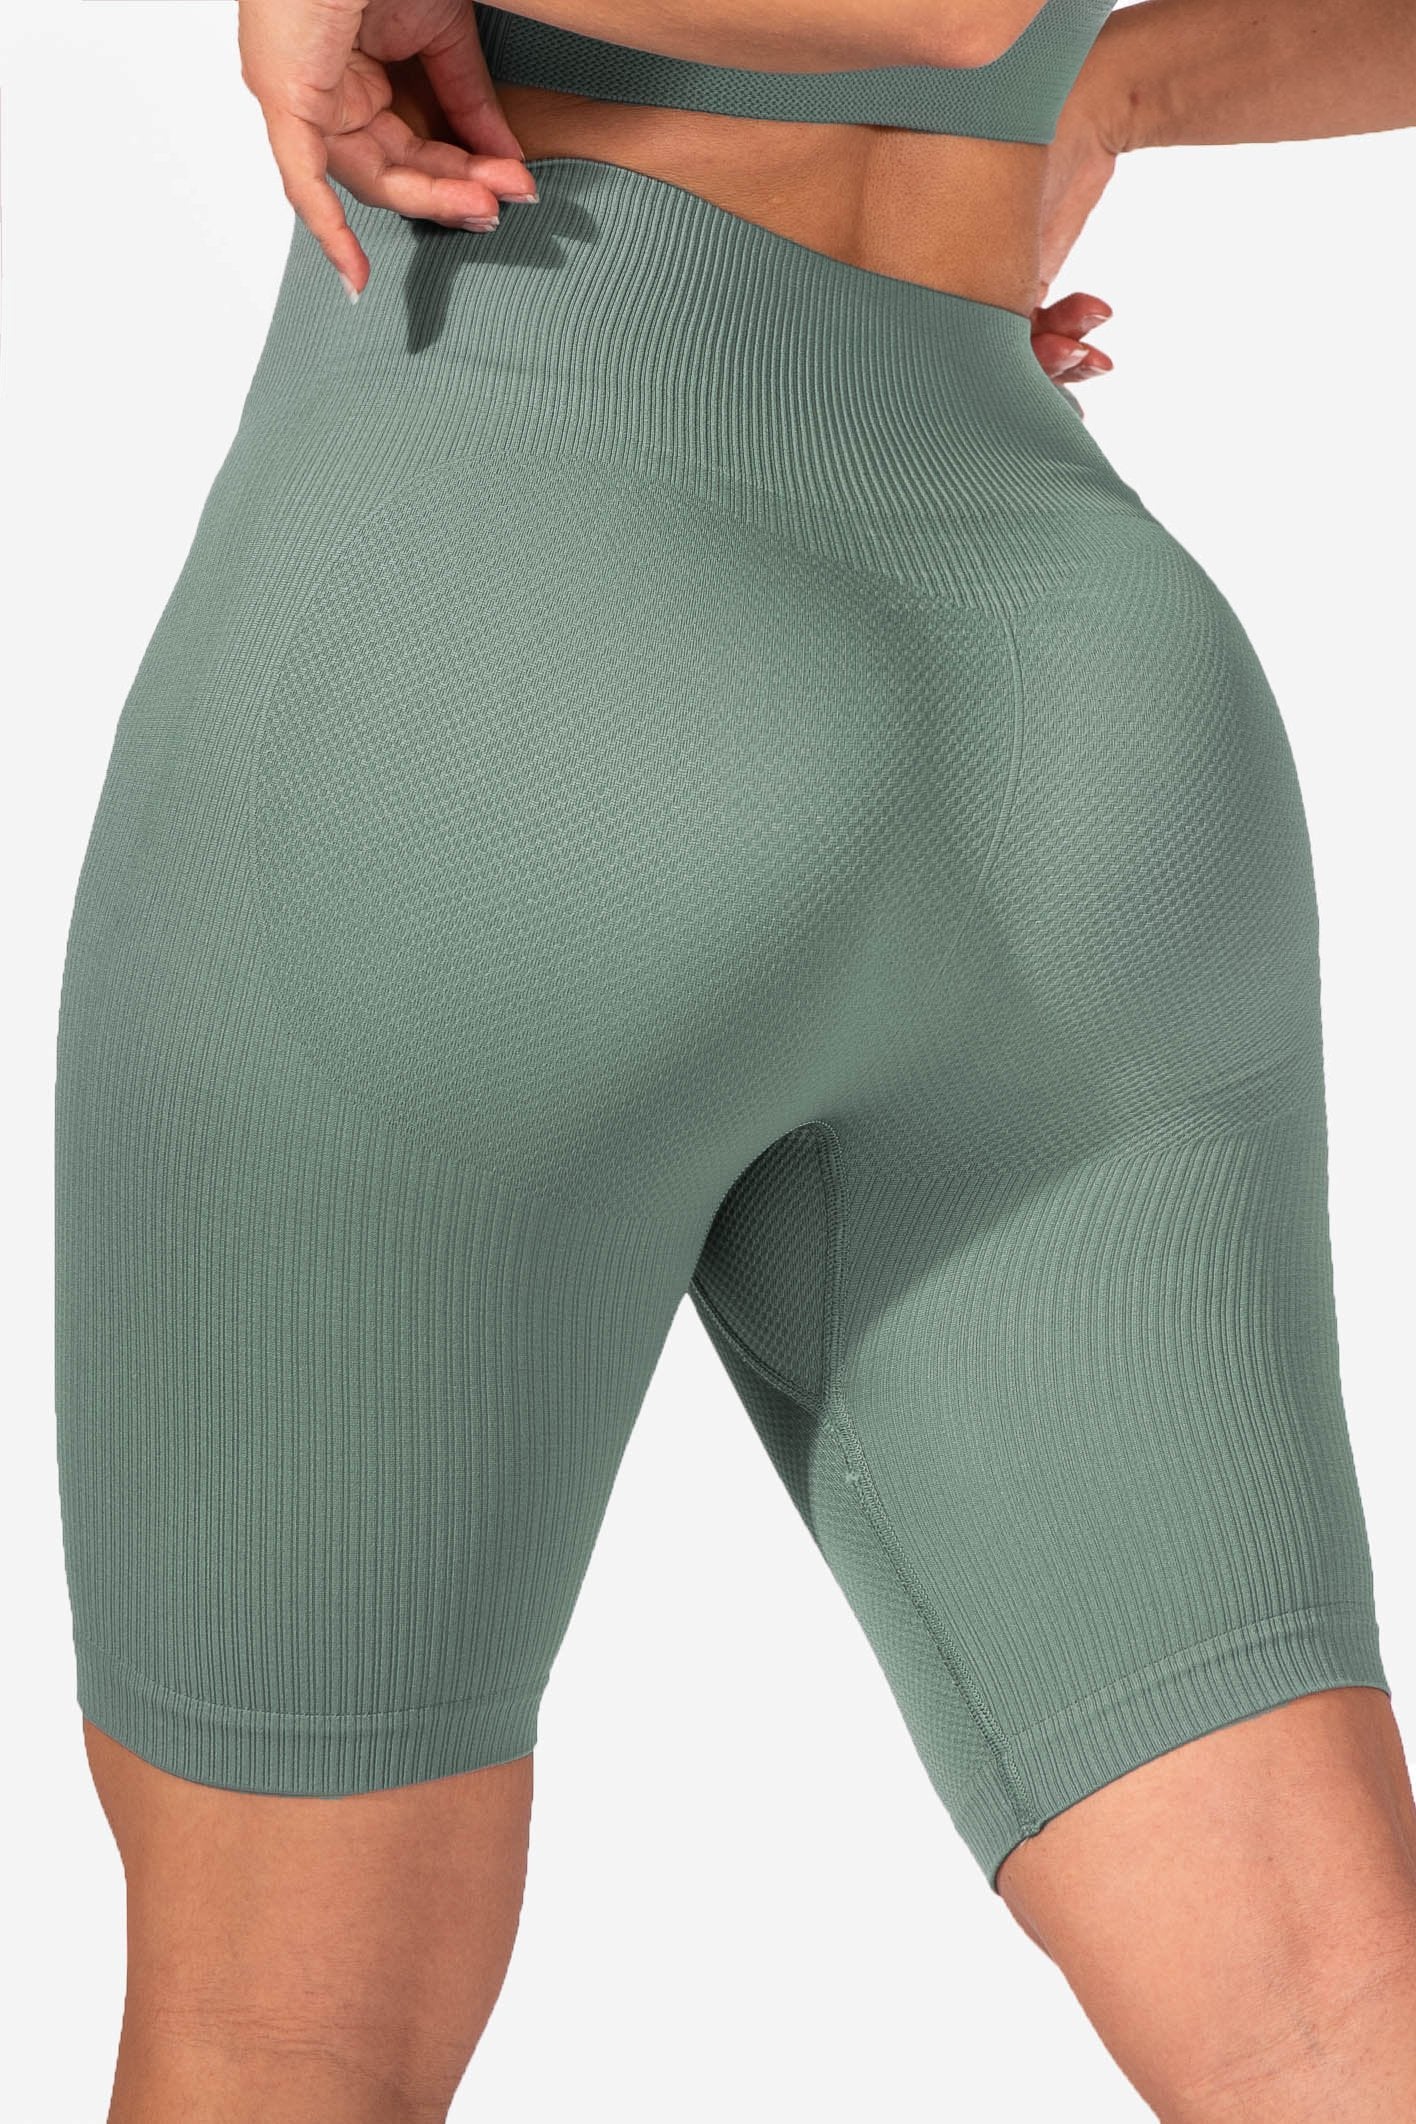 Rio Ribbed Biker Shorts - Teal Women's shorts Jed North 